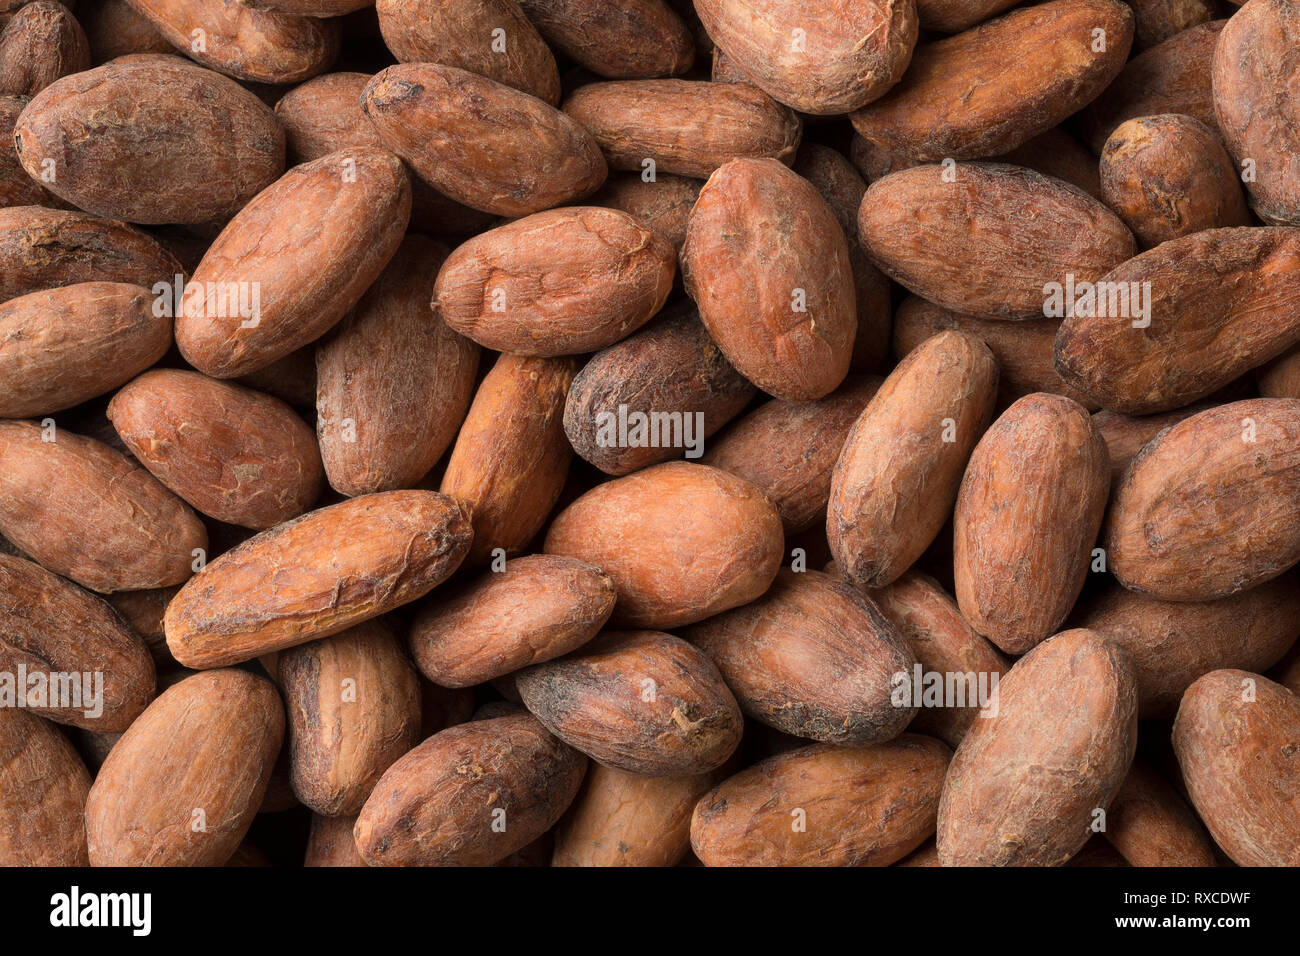 Whole organic cocoa beans full frame close up Stock Photo